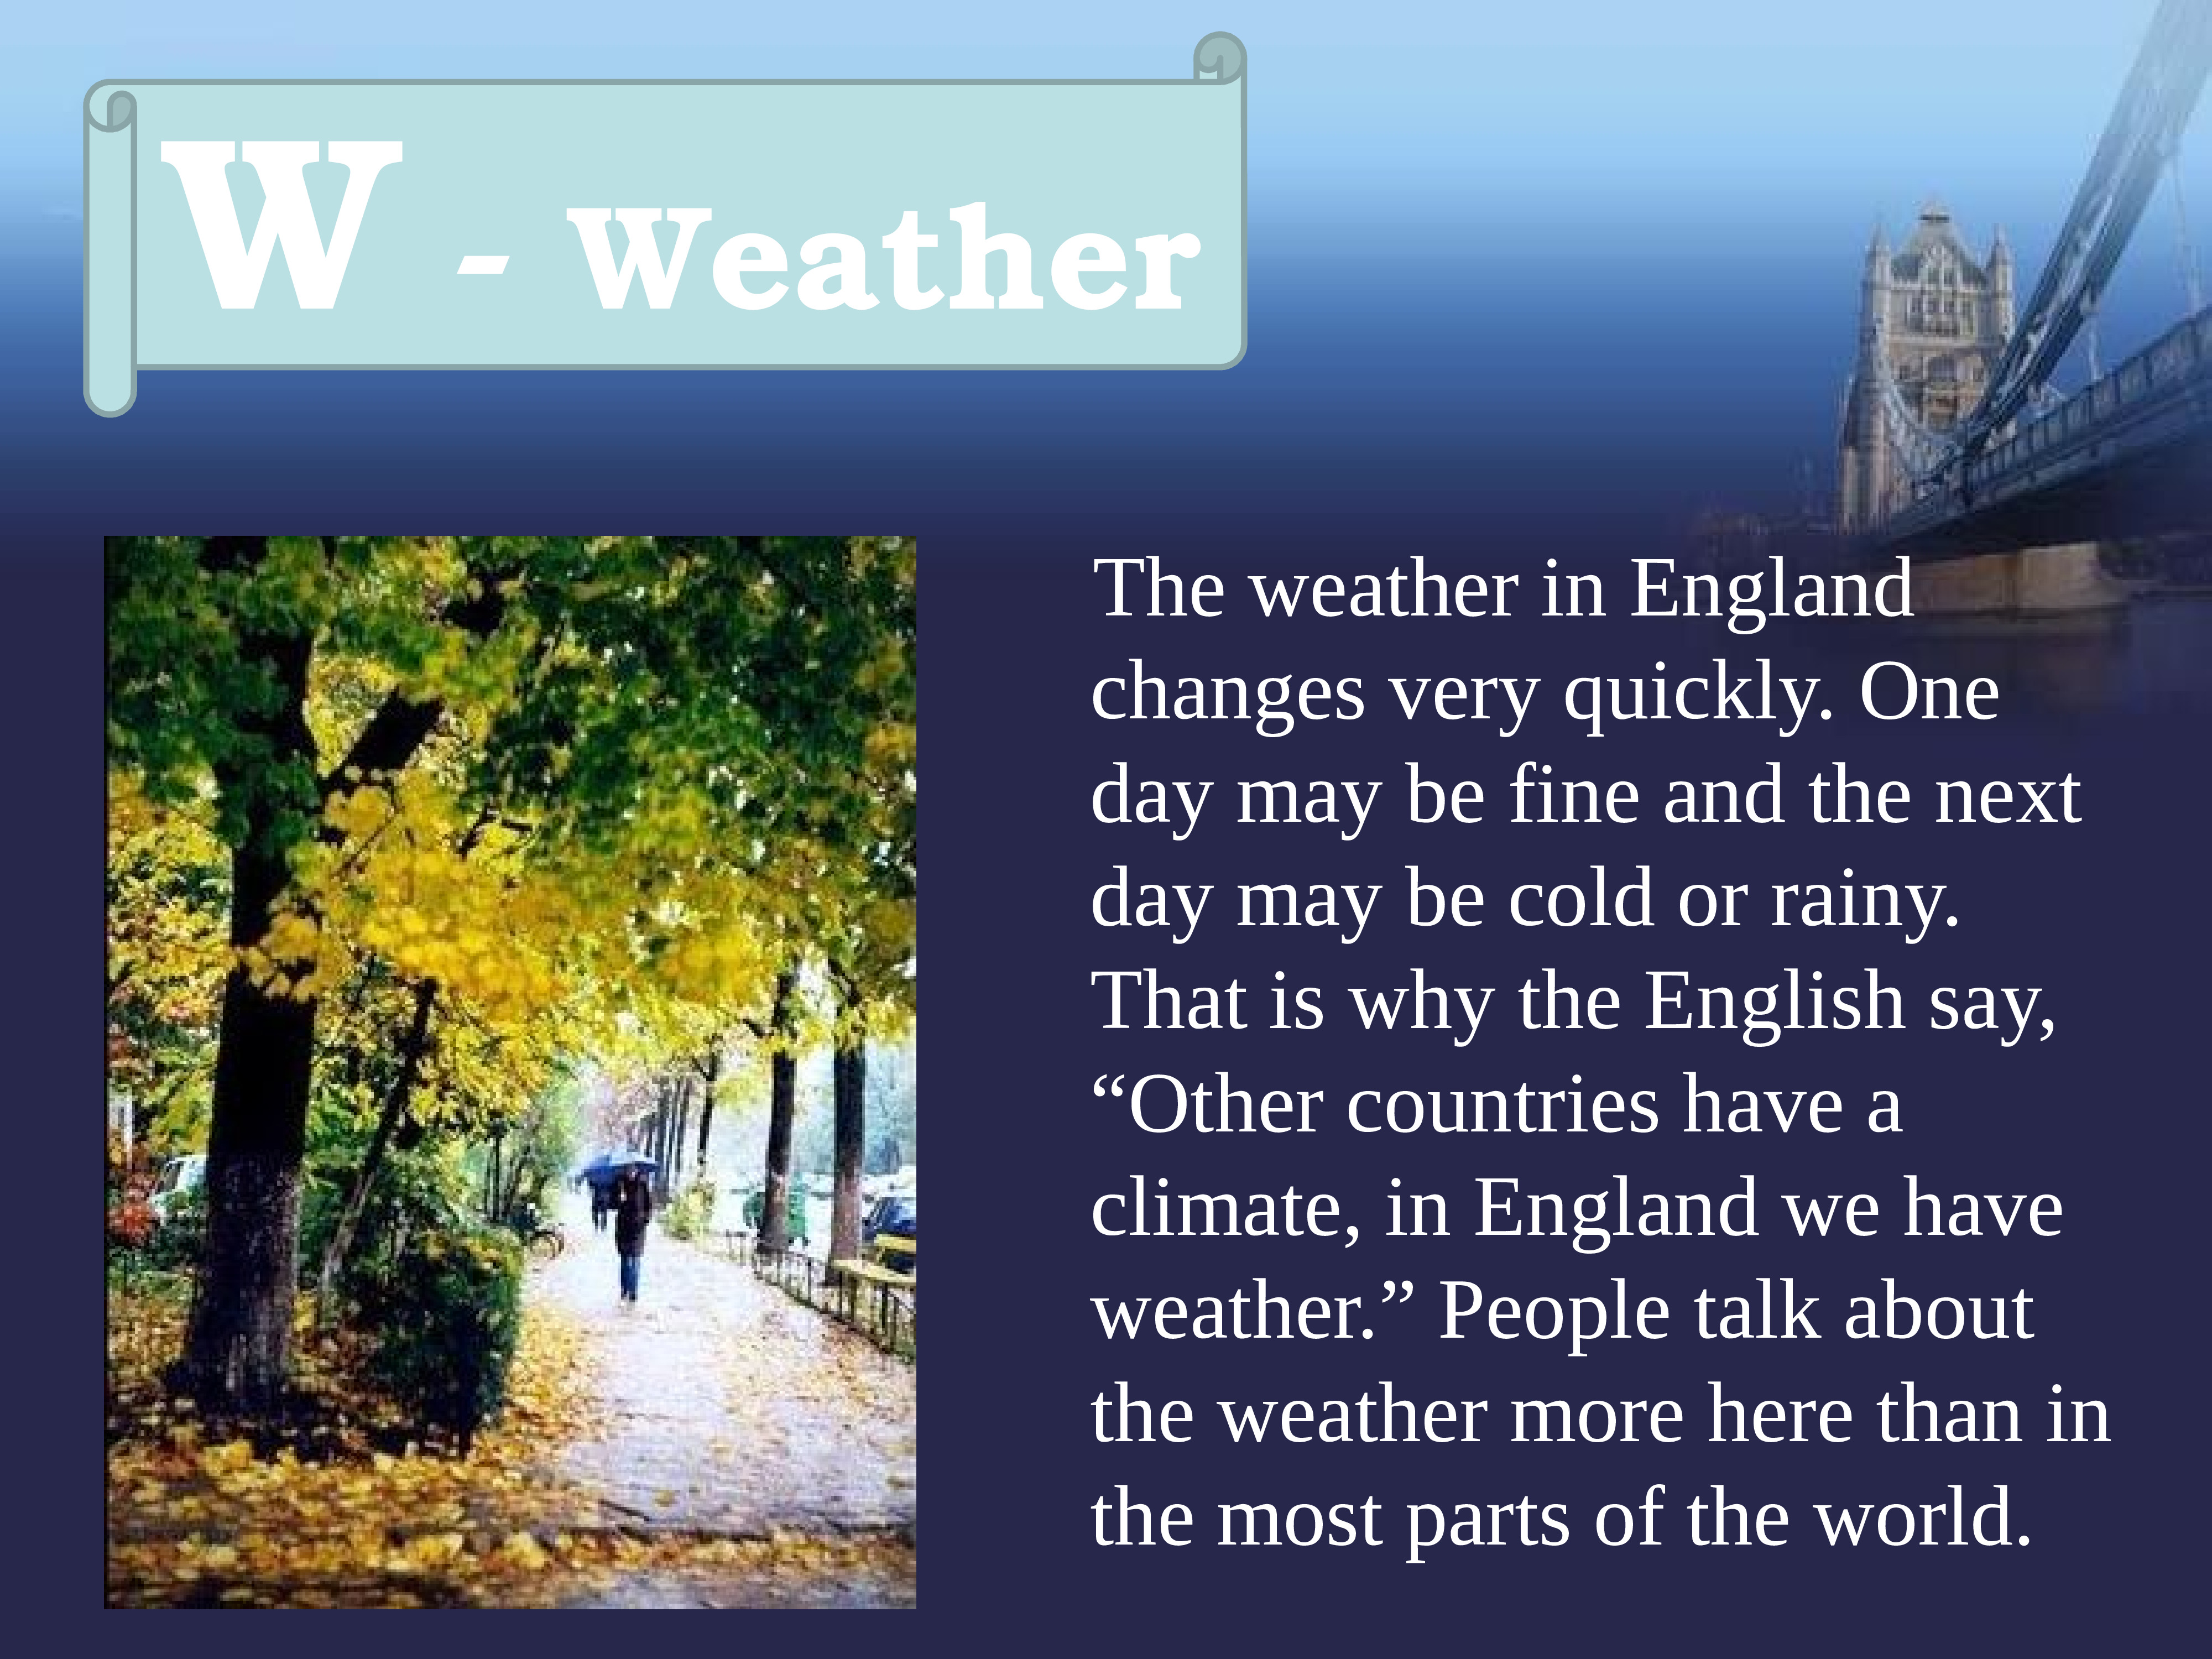 The weather is very warm. Описание погоды на английском. Weather английский язык. The weather in England текст. Погода по английски.